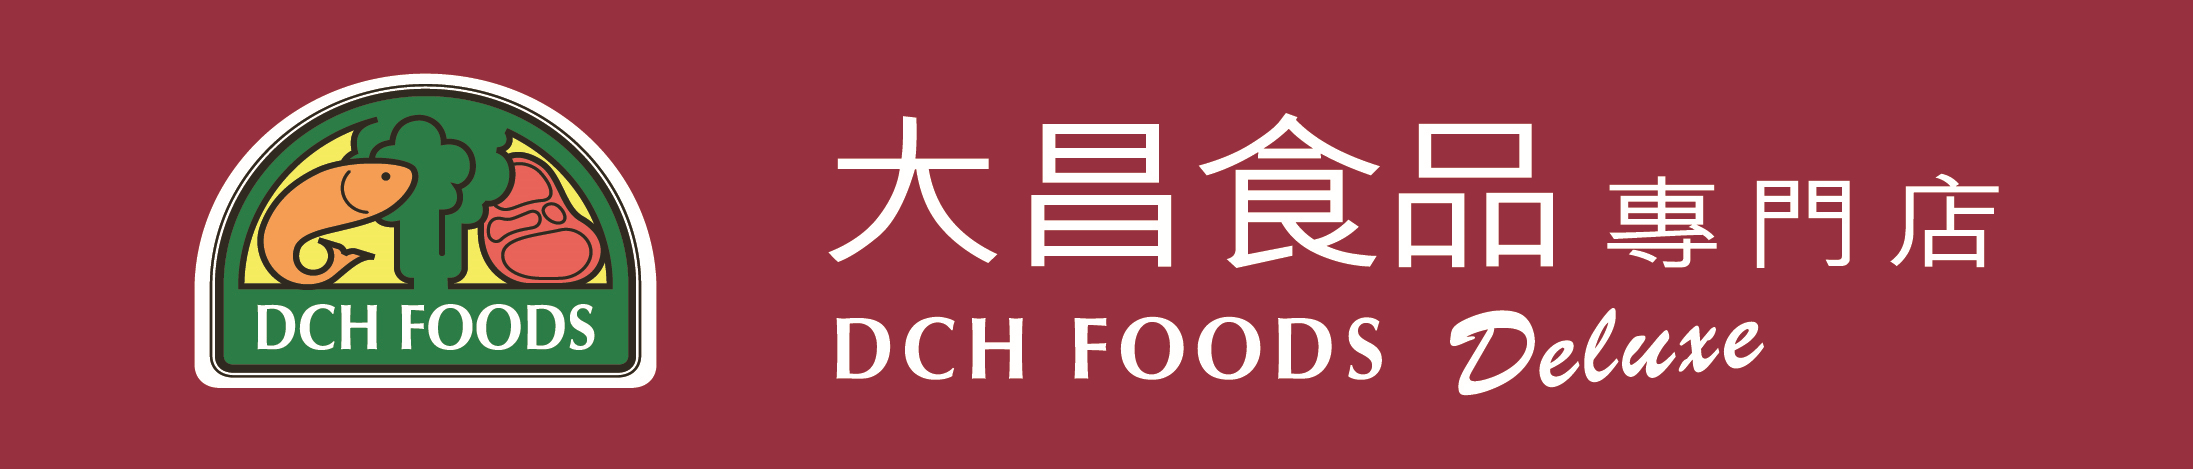 food scheme 2017 gold DCH FoodMart